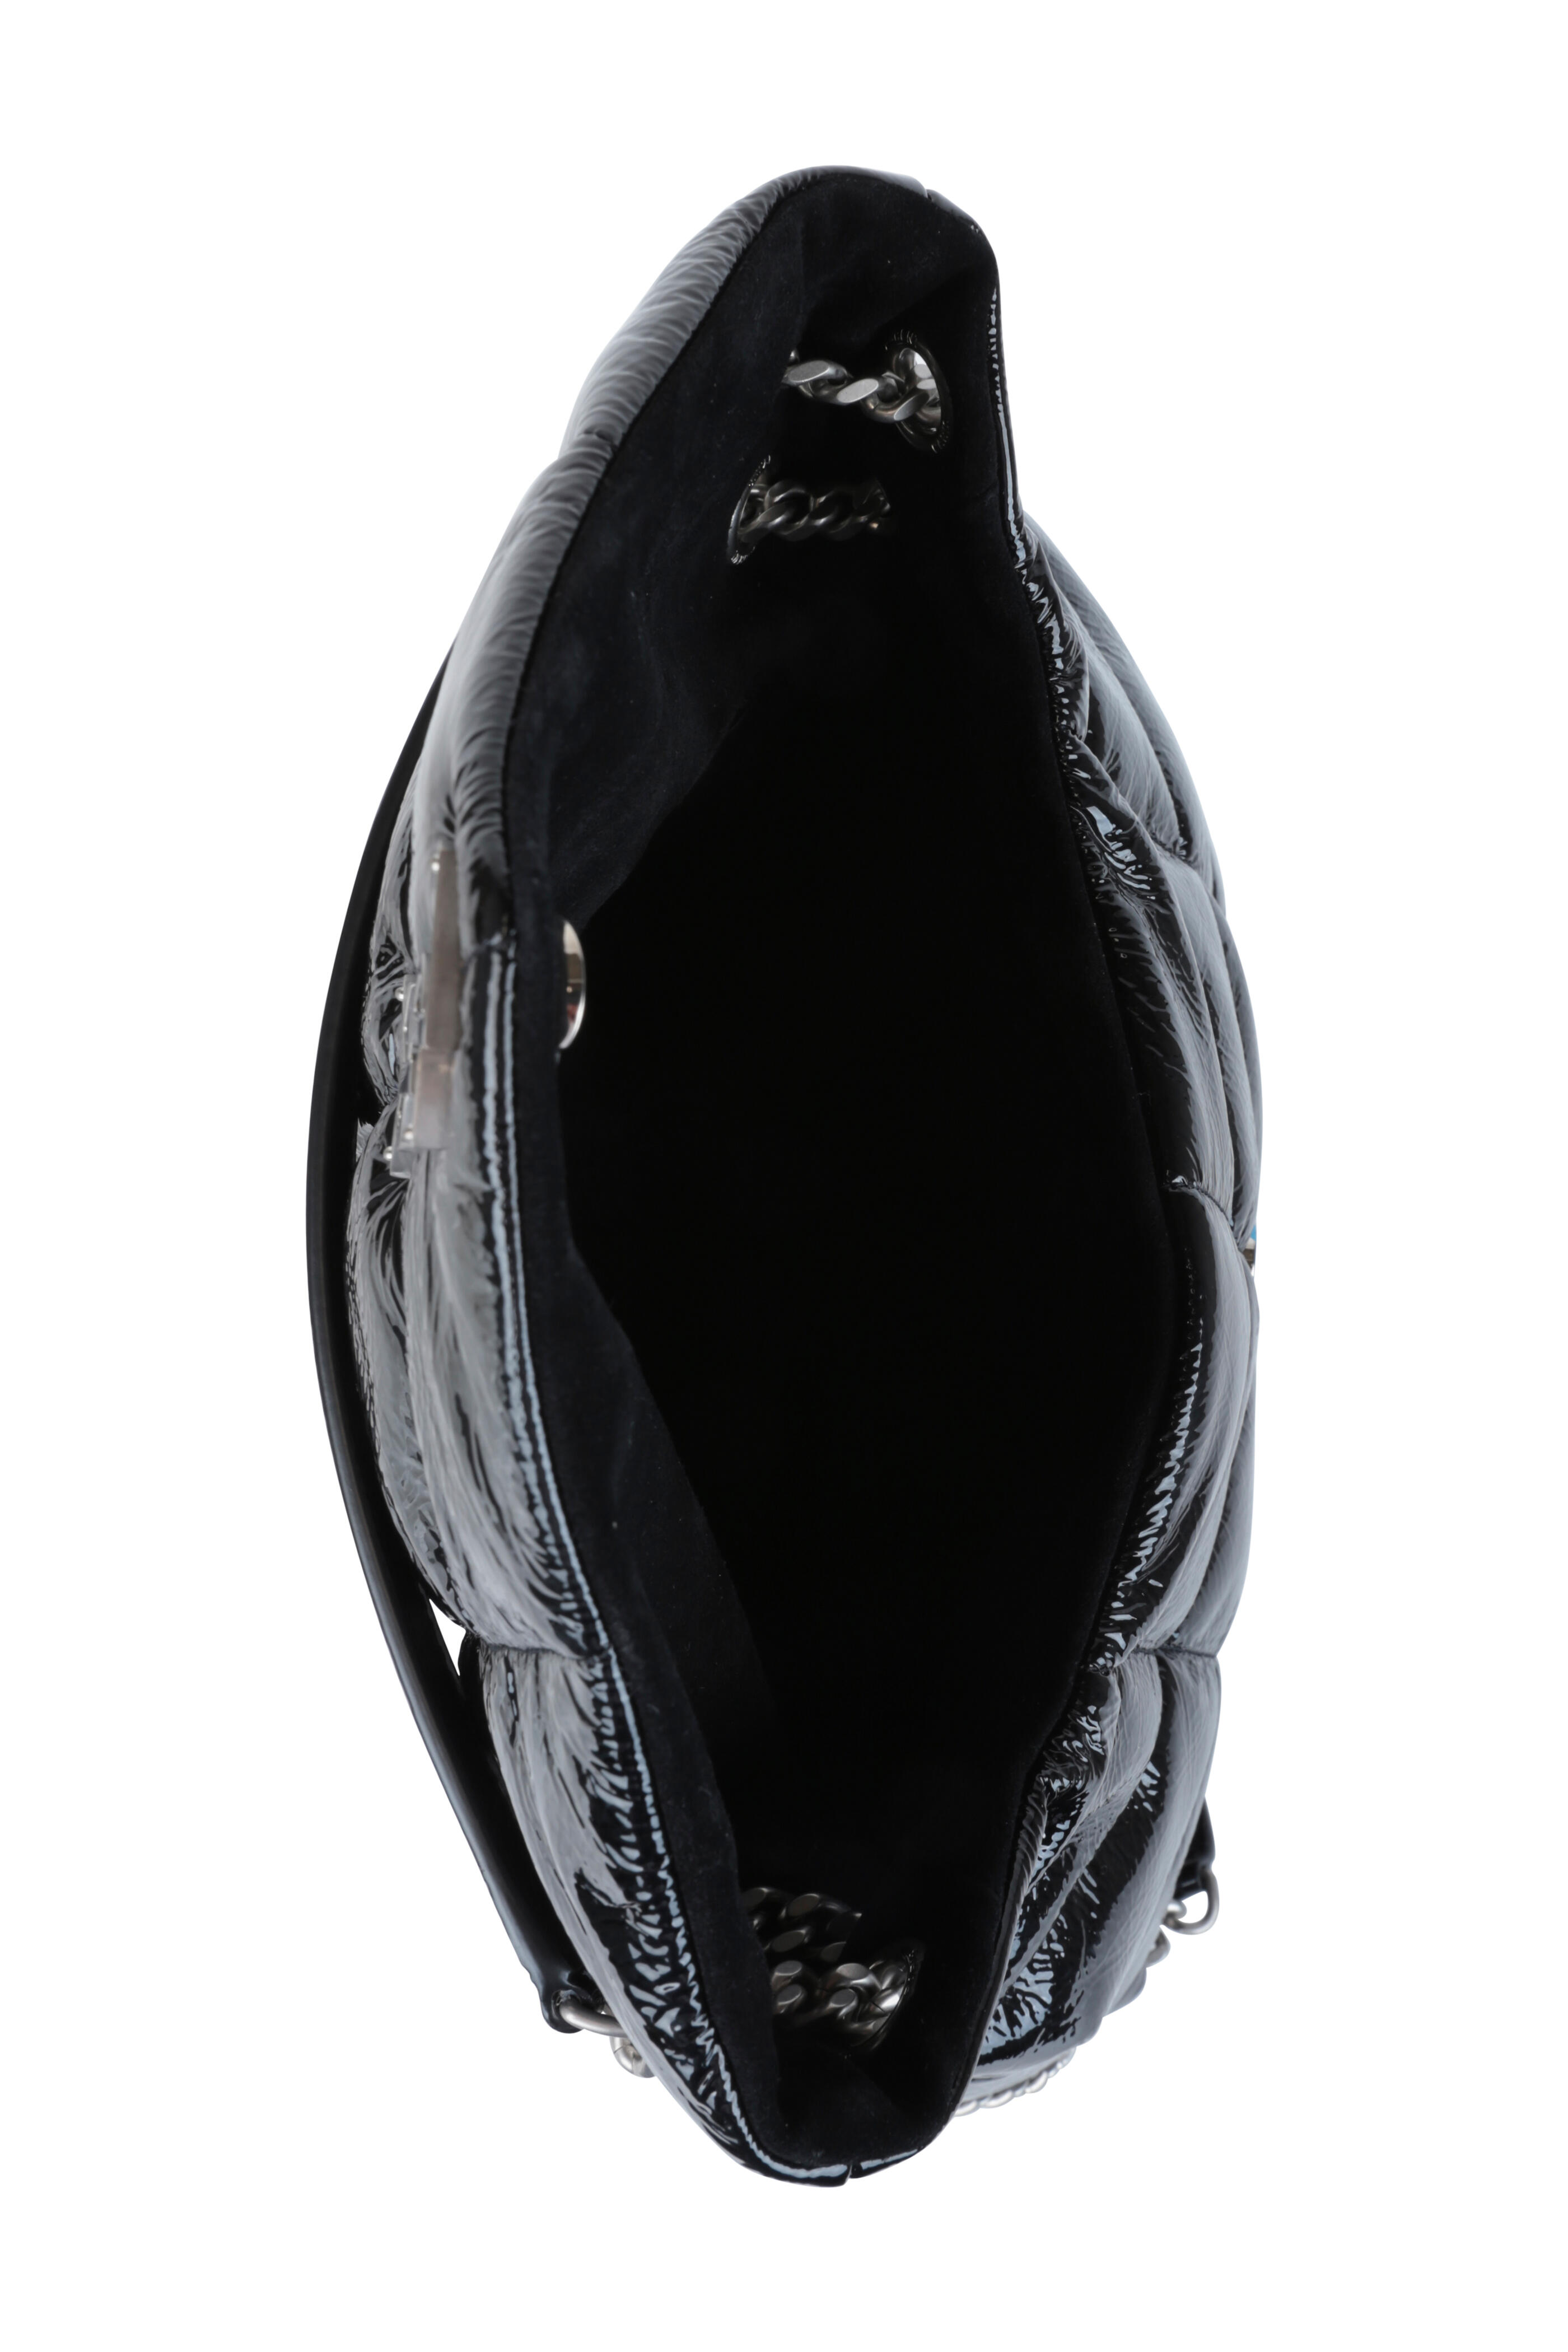 CHANEL Black Patent Leather Jumbo Size Flap Shoulder Bag Crossbody